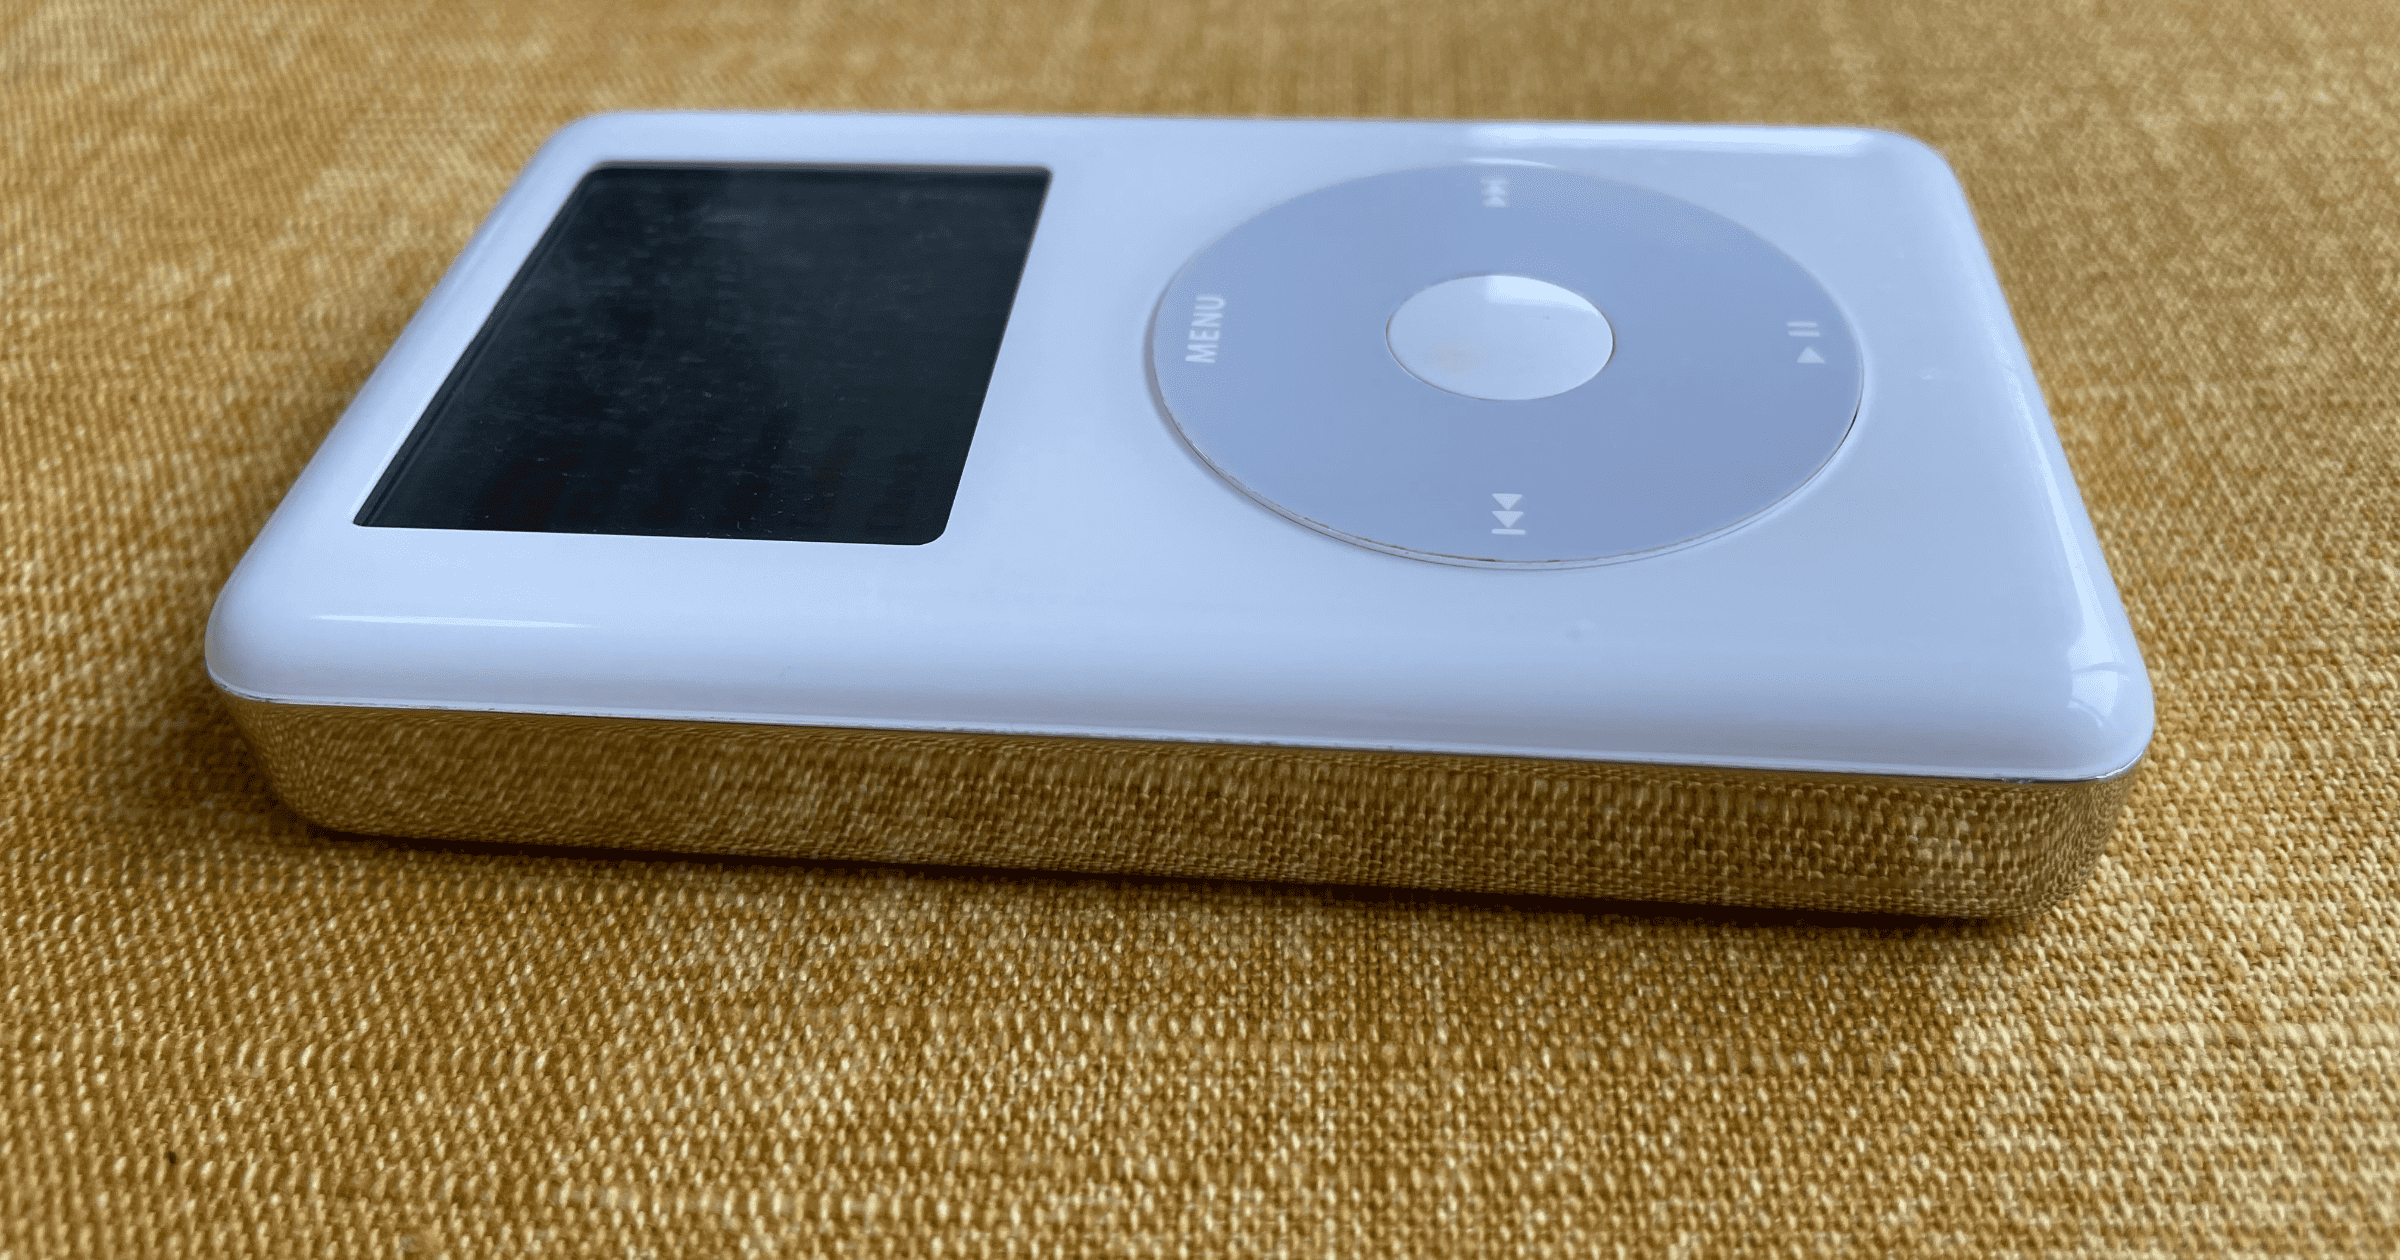 iPod Classic gen 4